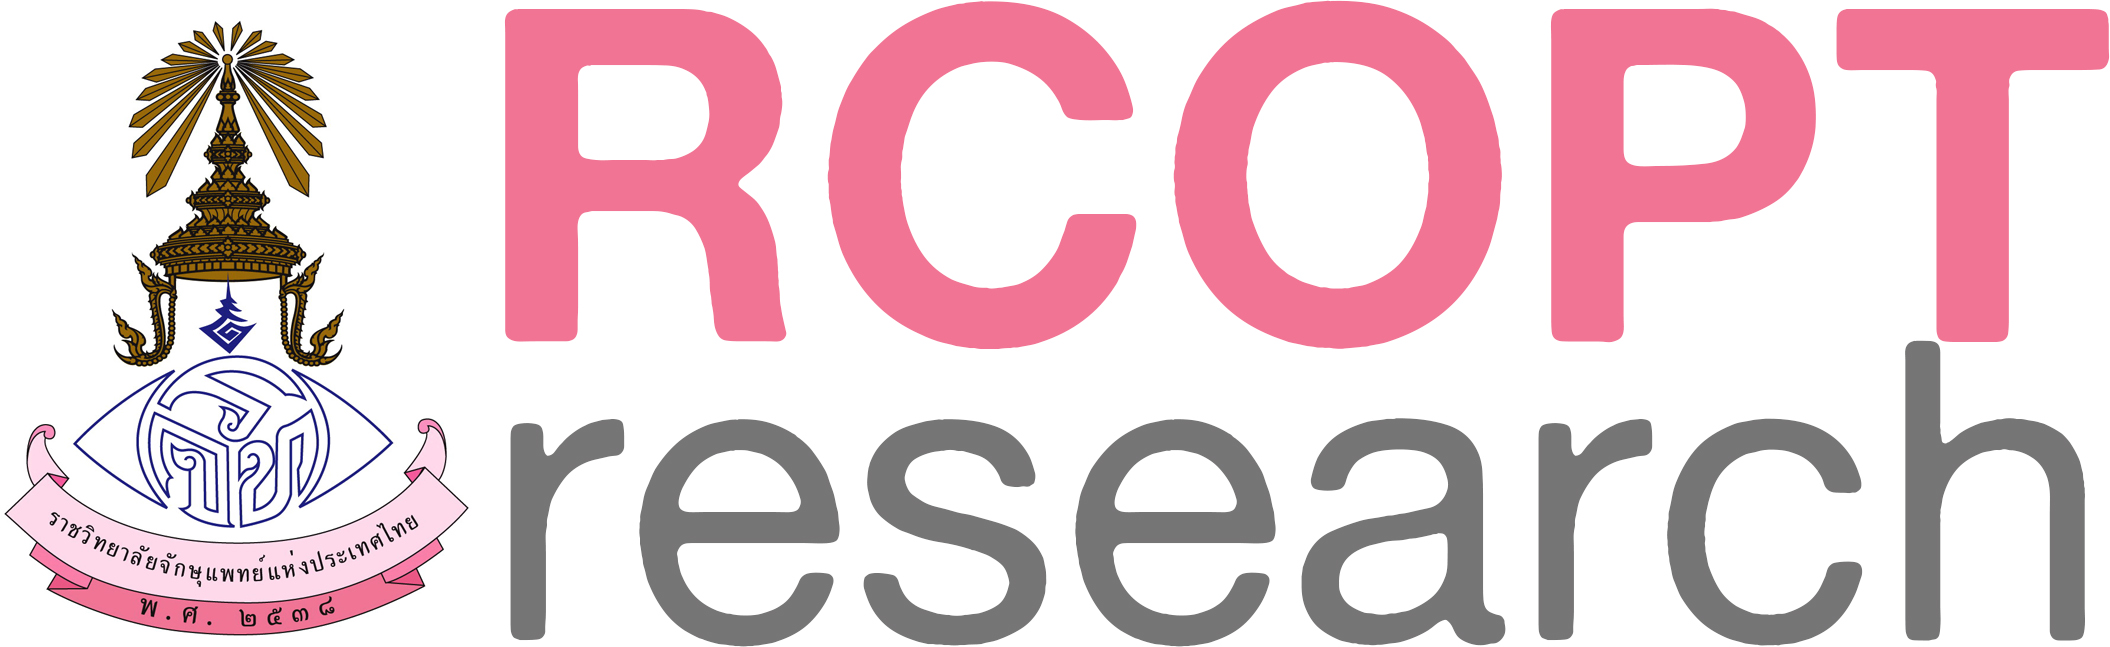 2018RCOPT research logo1.jpg